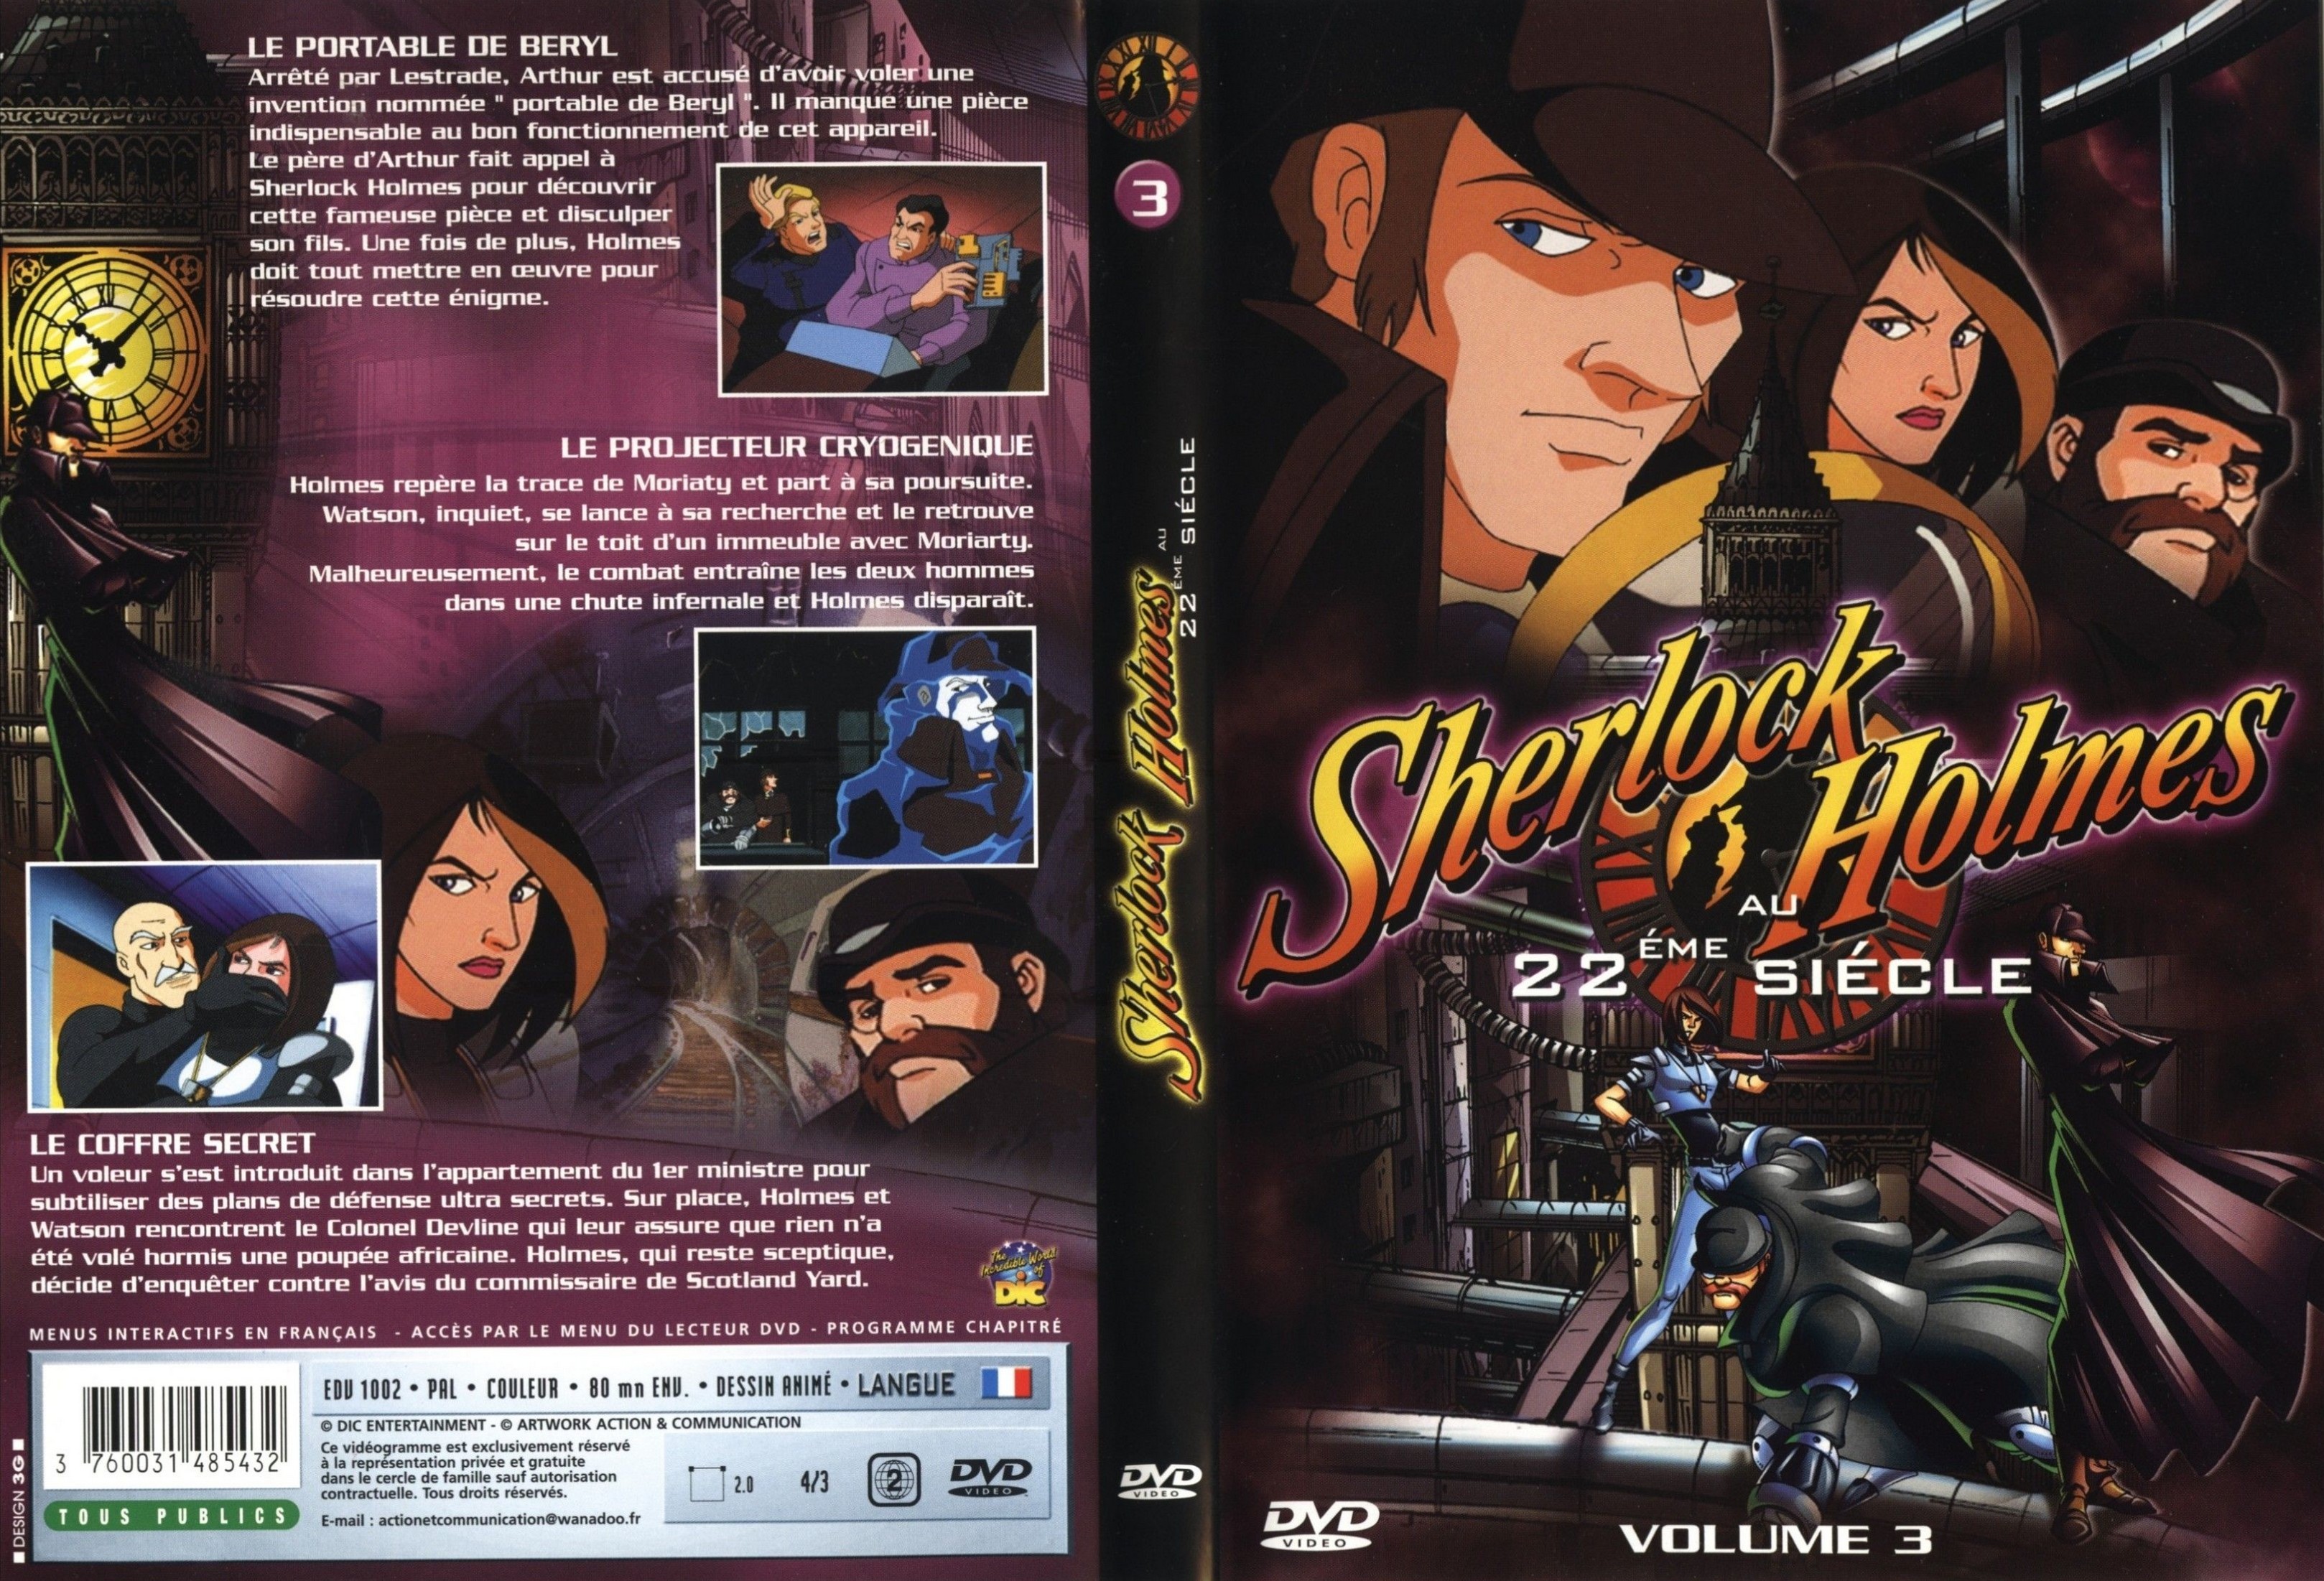 Jaquette DVD Sherlock Holmes au 22 me sicle vol 3